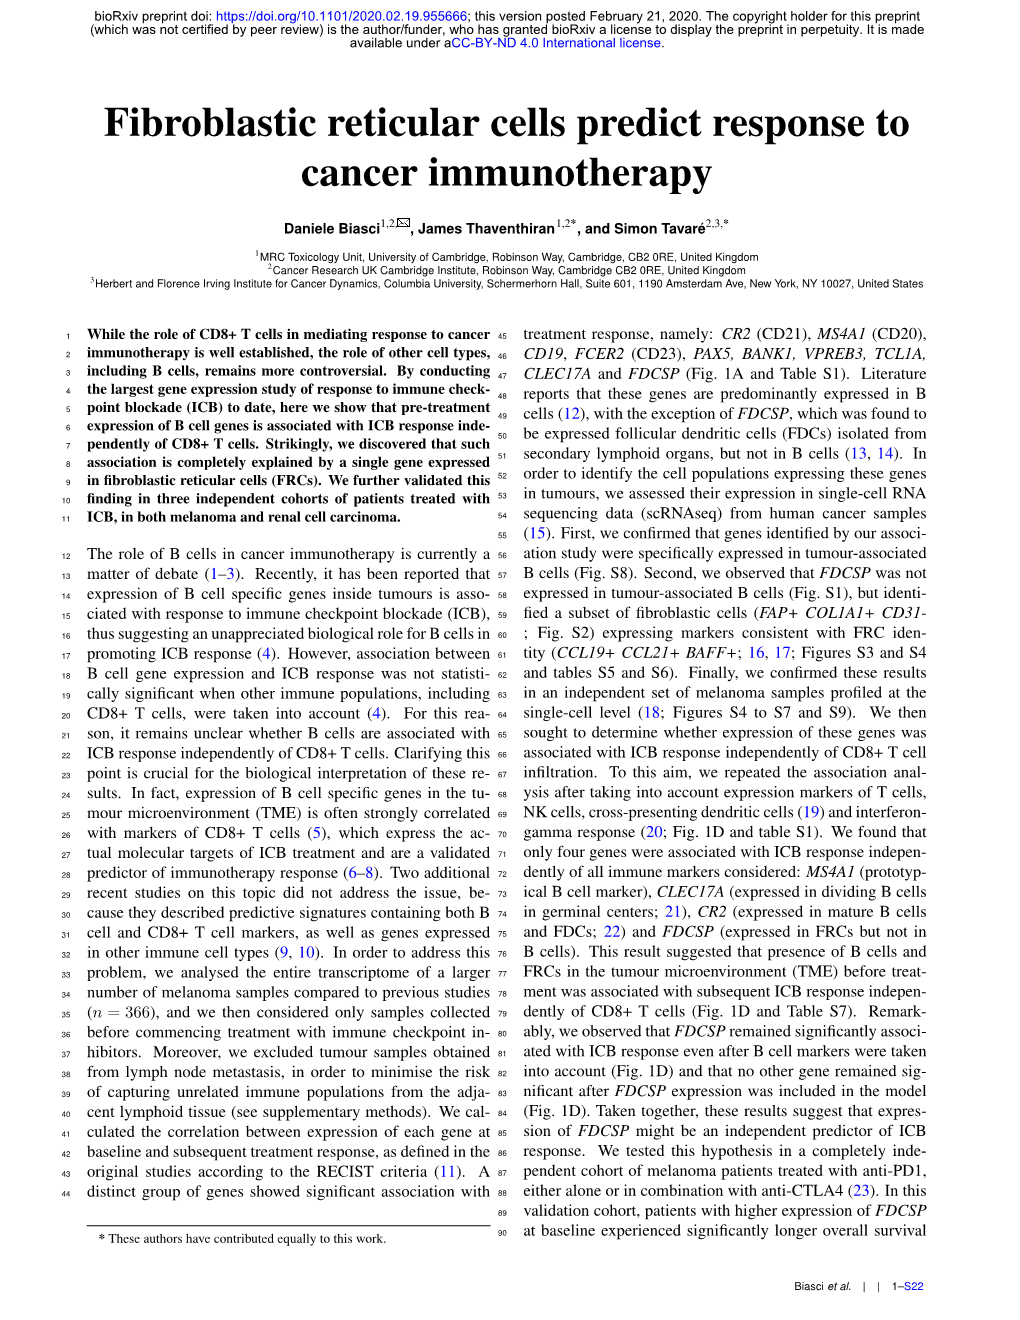 Fibroblastic Reticular Cells Predict Response to Cancer Immunotherapy